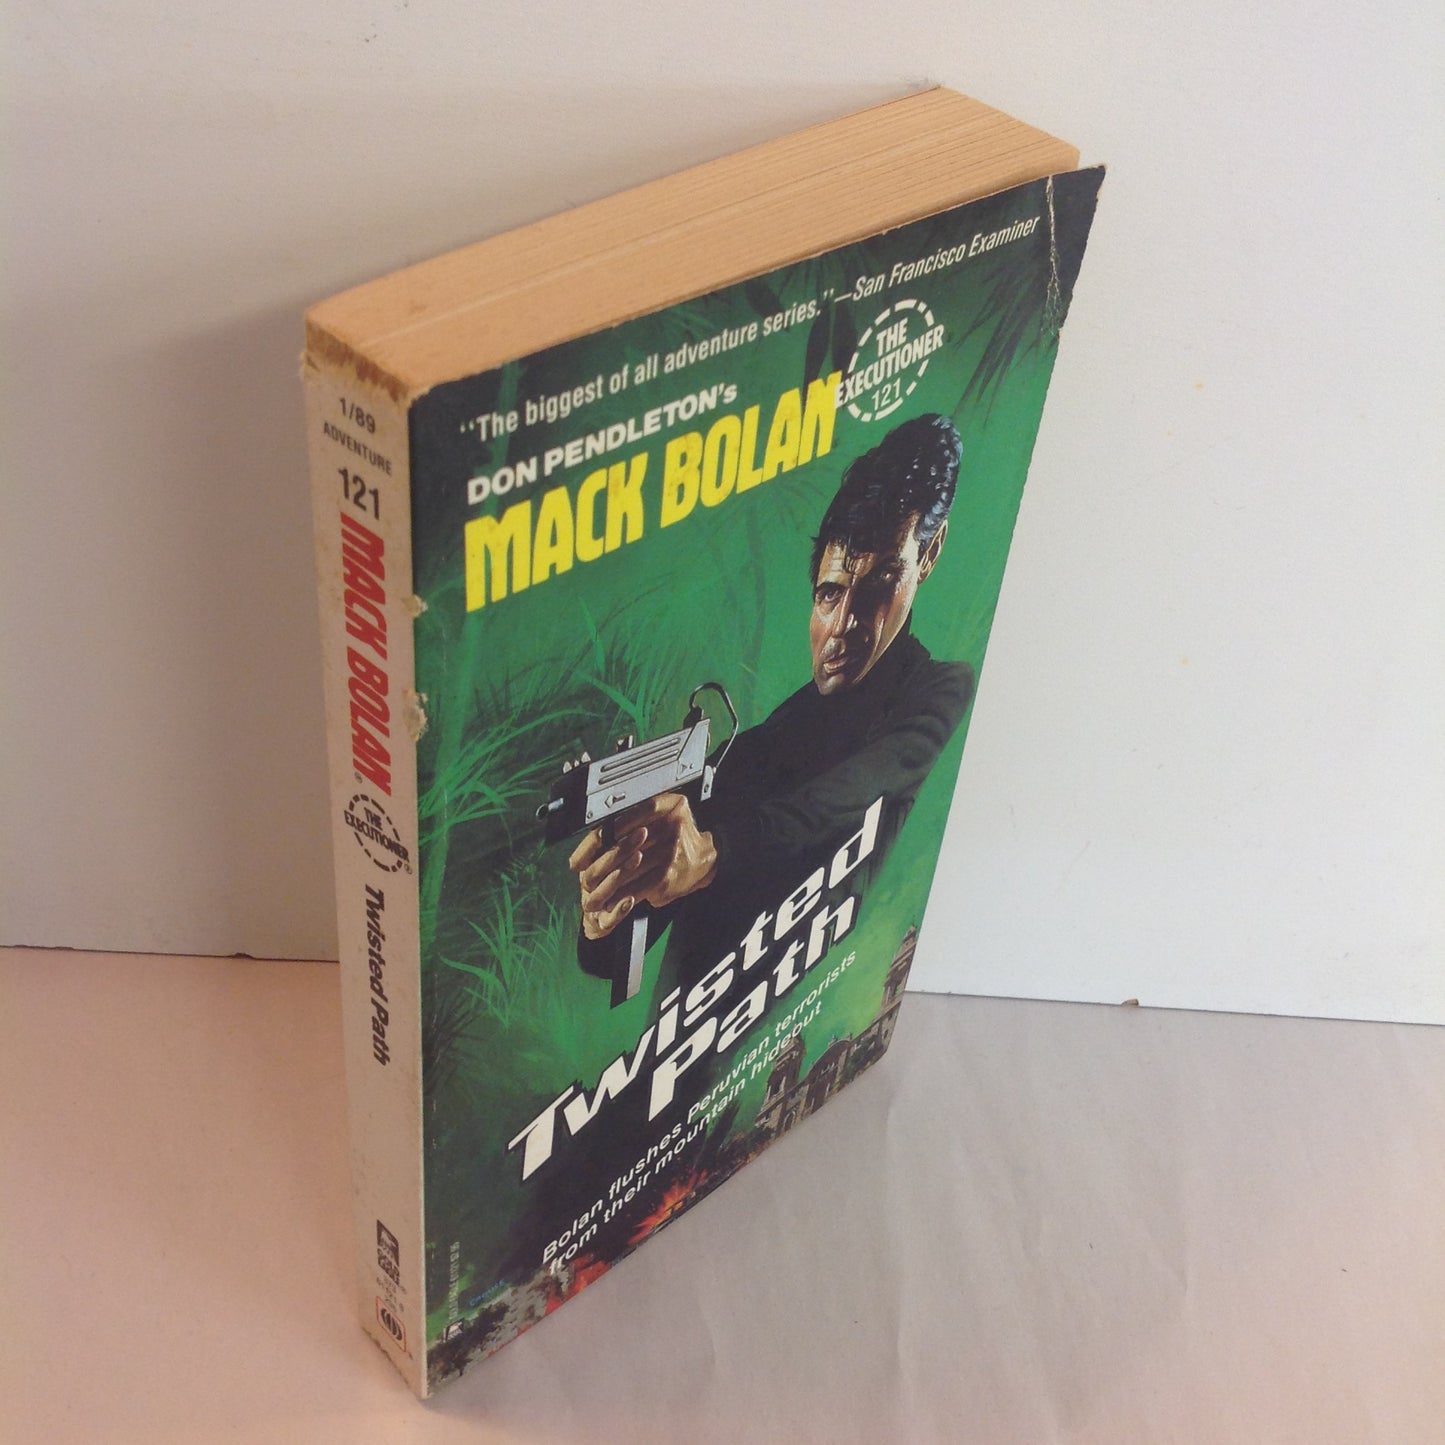 Vintage 1989 Mass Market Paperback Don Pendleton's Mack Bolan The Executioner #121: Twisted Path